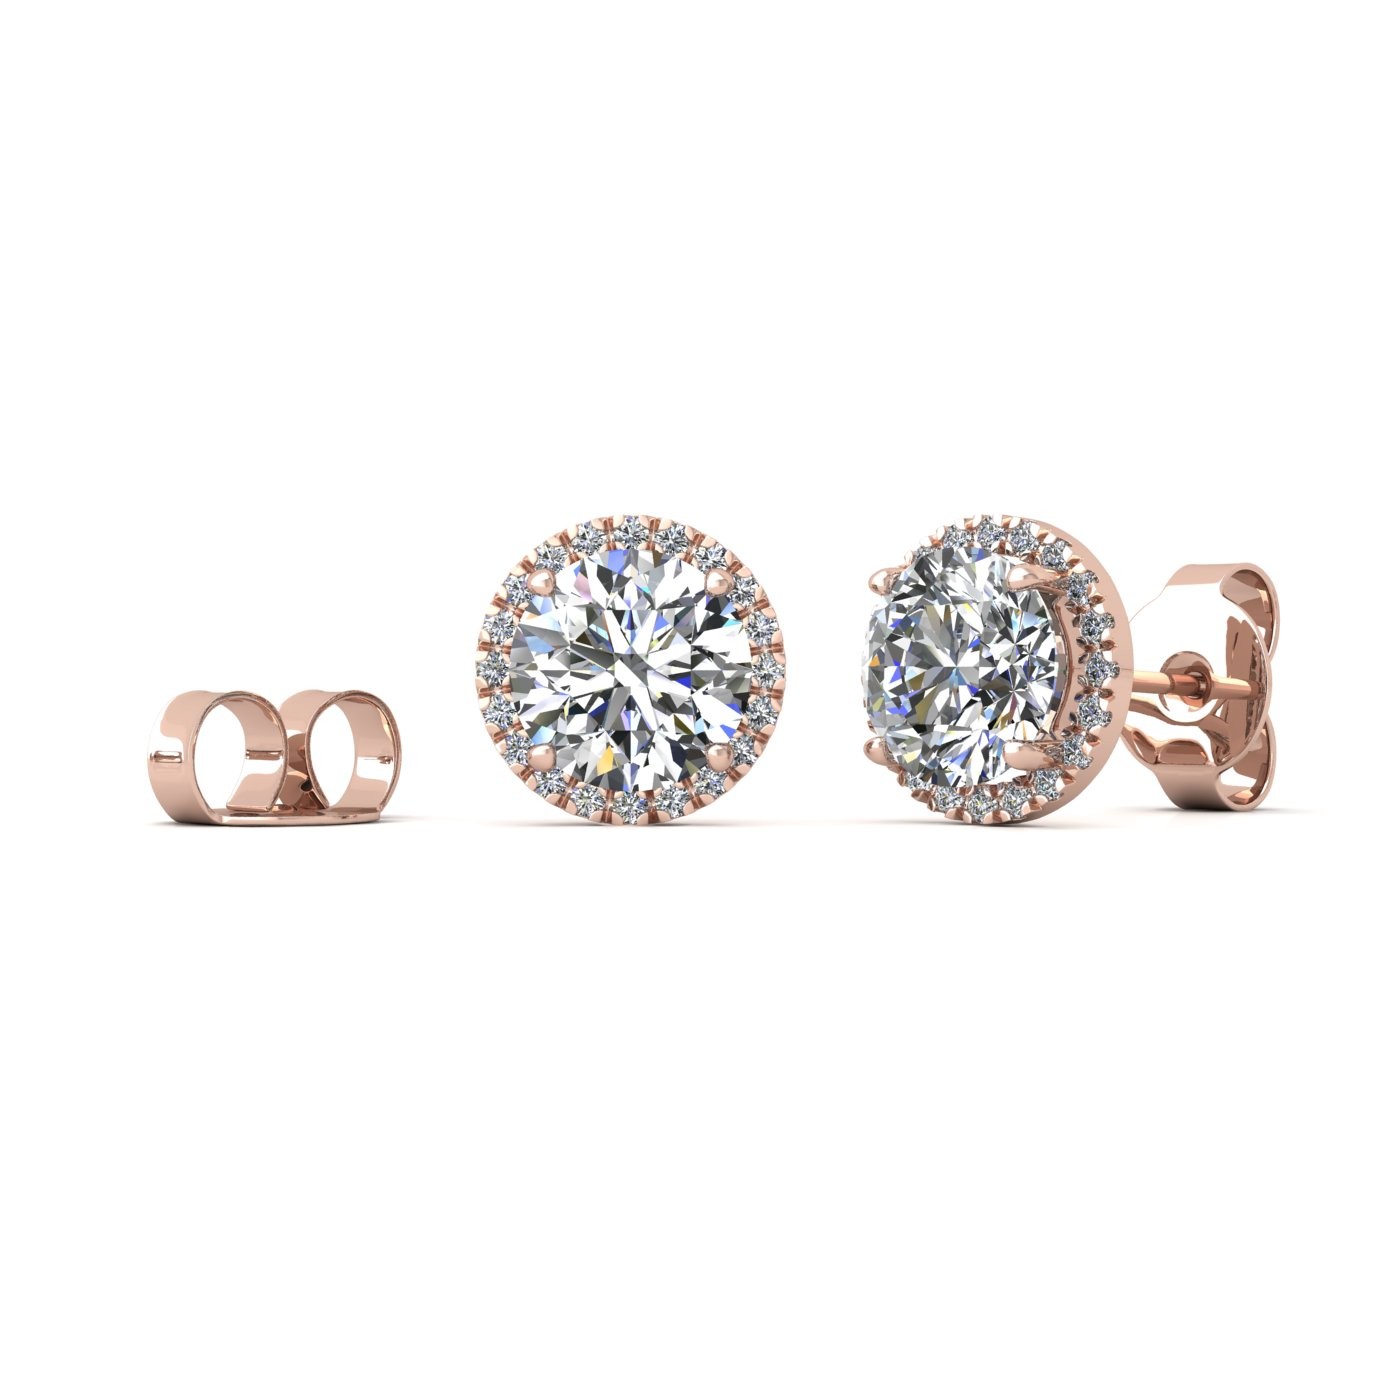 18k rose gold 2 ct each (4,0 tcw) 4 prongs round shape diamond earrings with diamond pavÉ set halo Photos & images